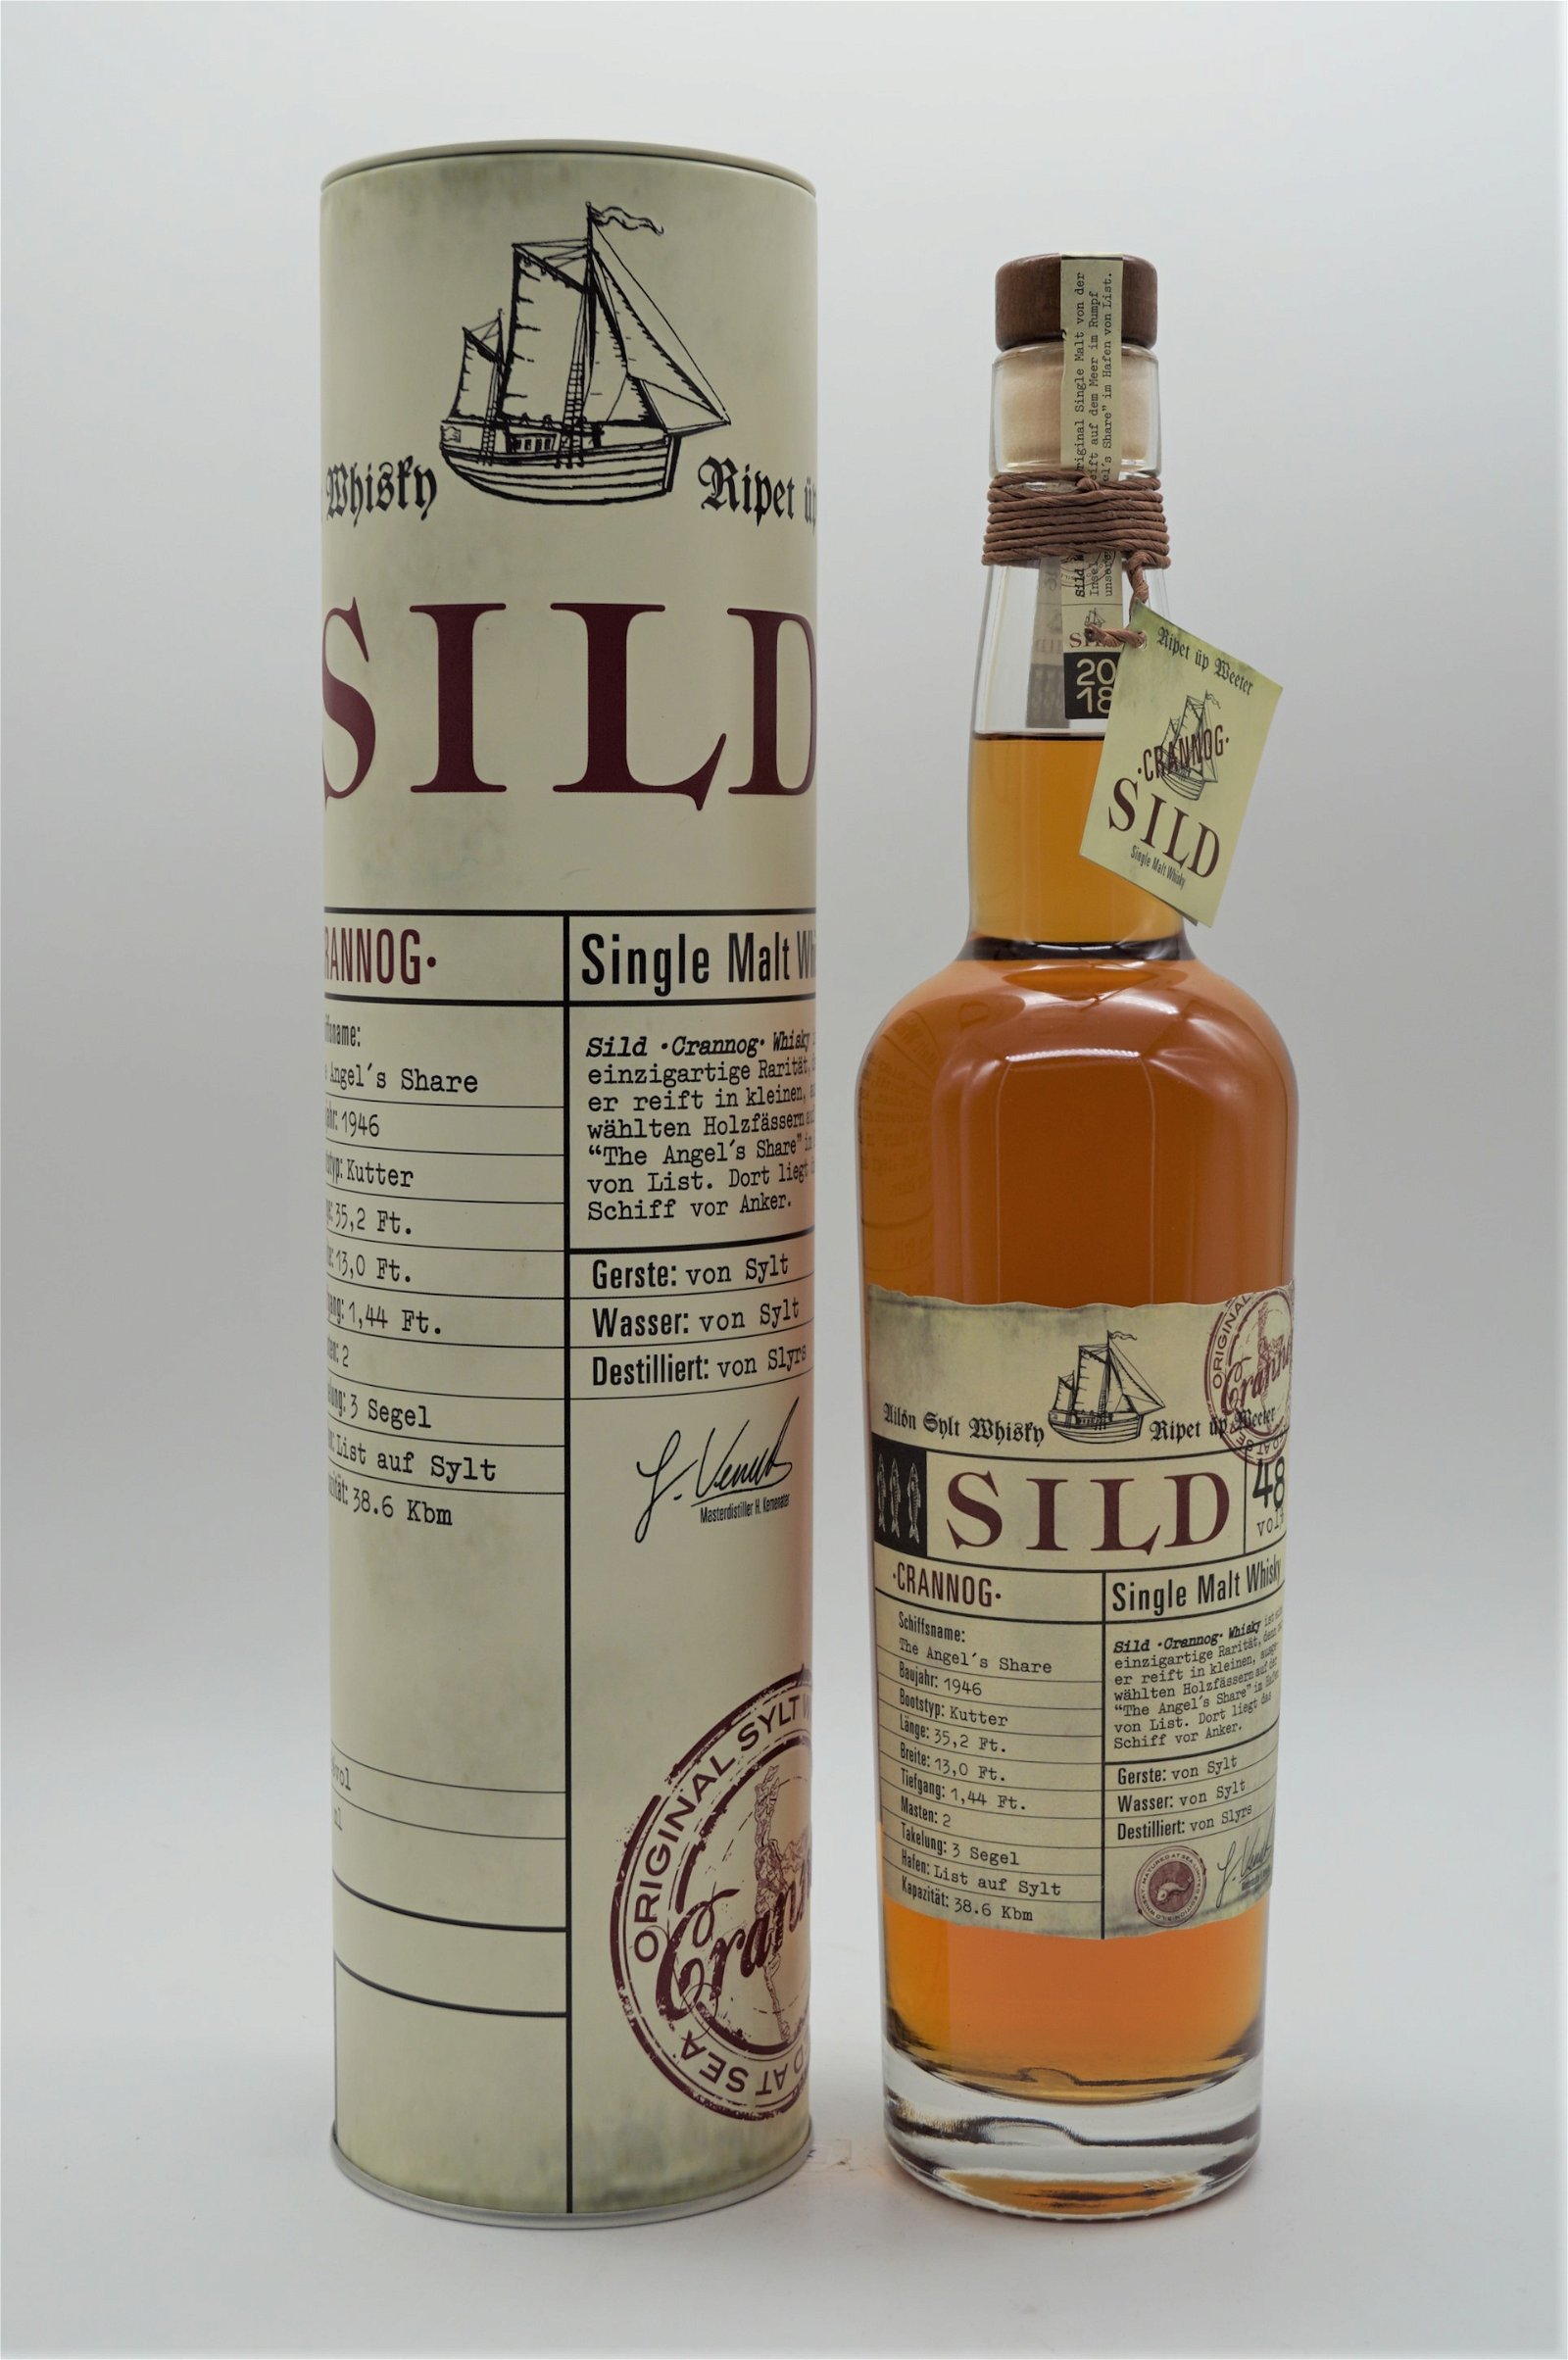 SILD Crannog Single Malt Whisky by Slyrs